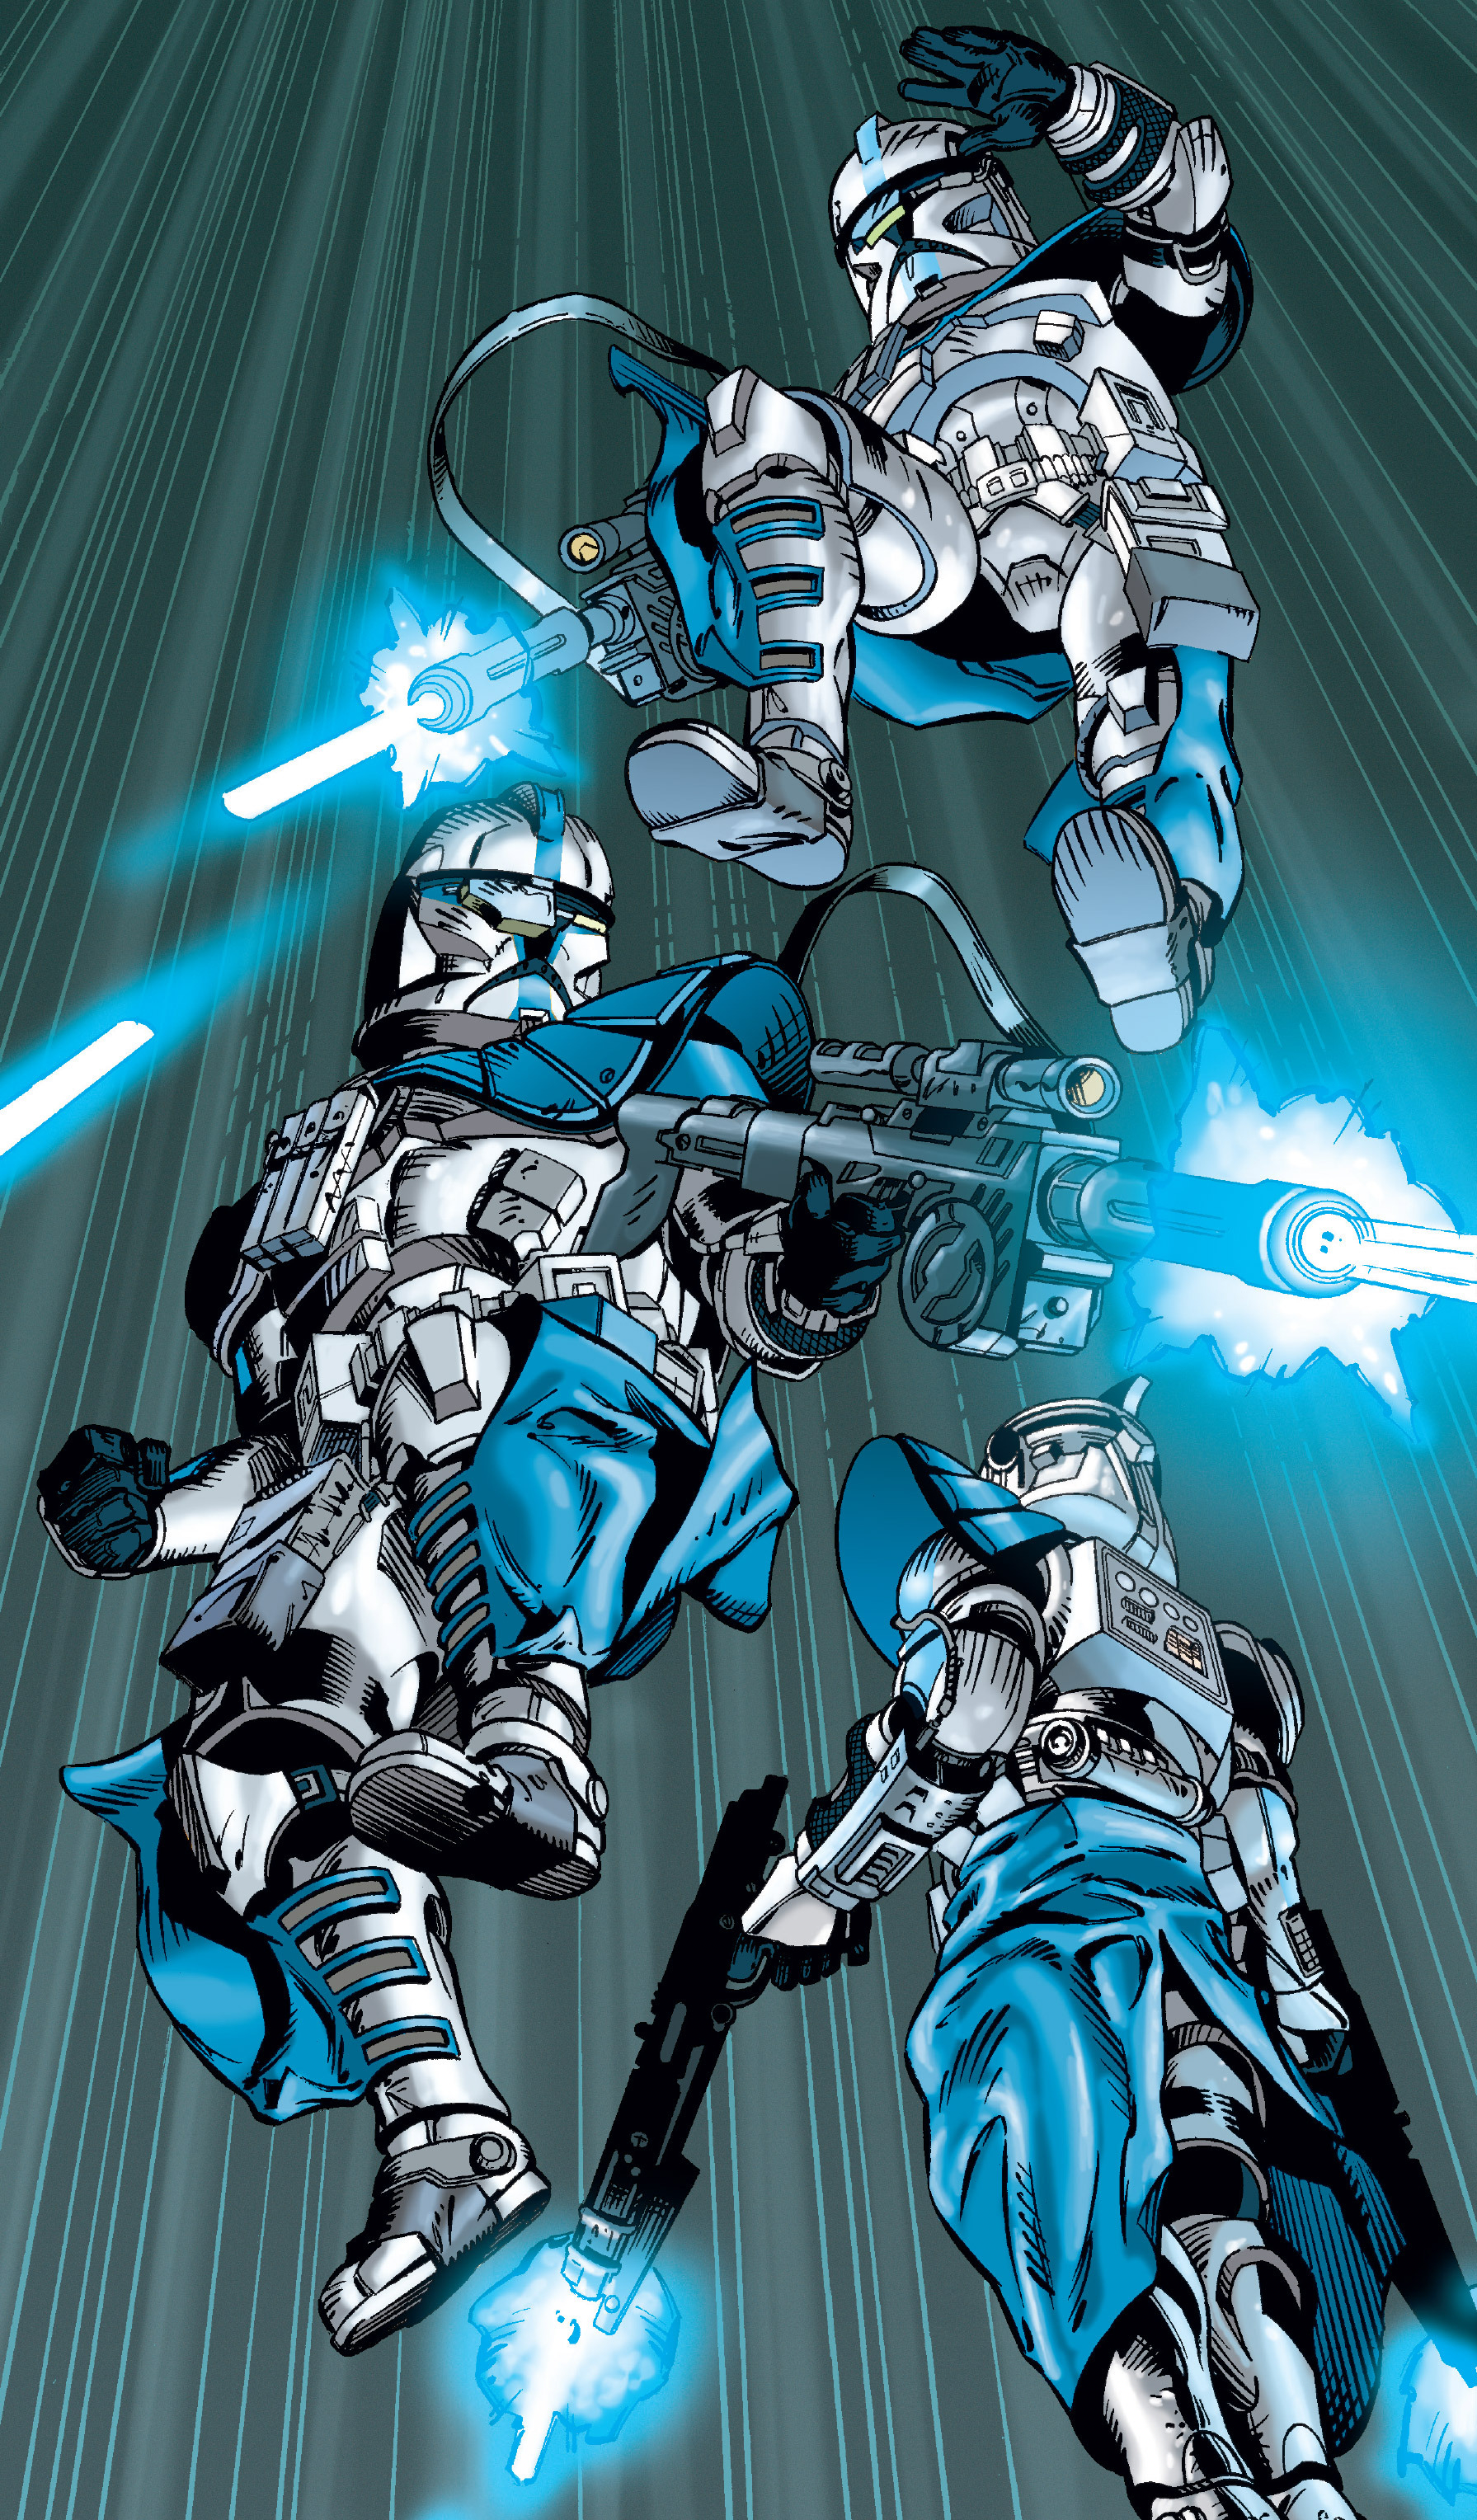 arc troopers vs commandos